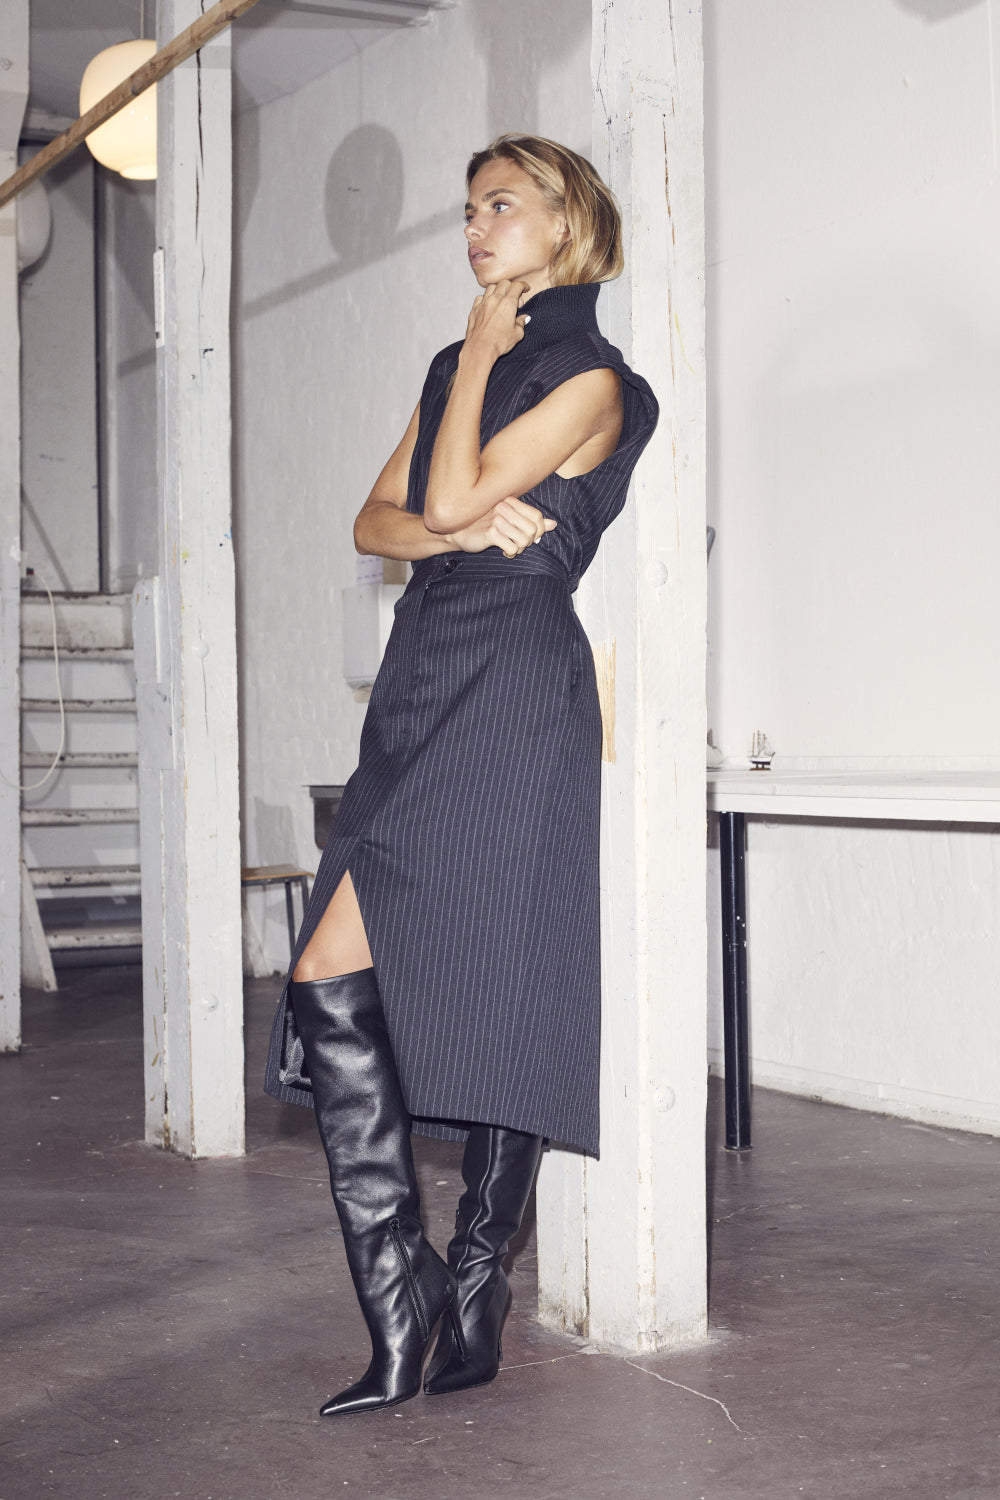 Co'Couture Dark Grey Ida Pencil Skirt